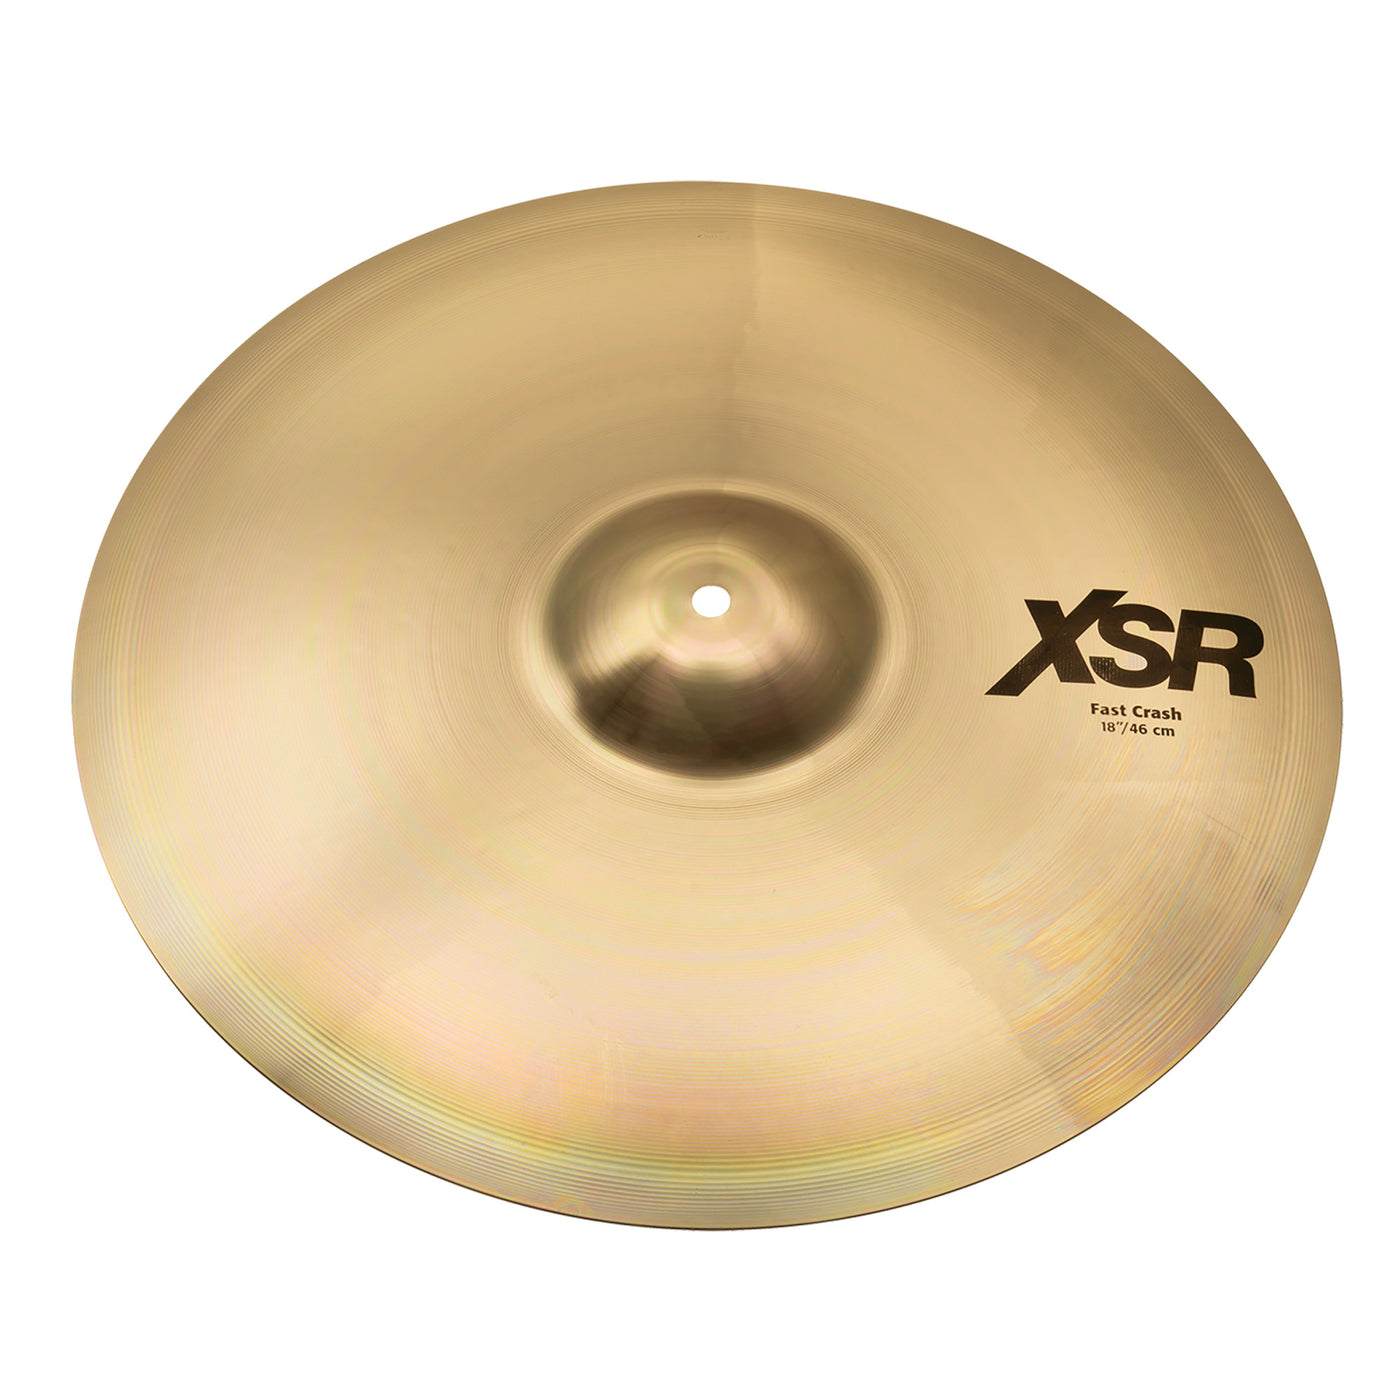 Sabian 18" XSR Fast Crash Cymbal - Brilliant Finish